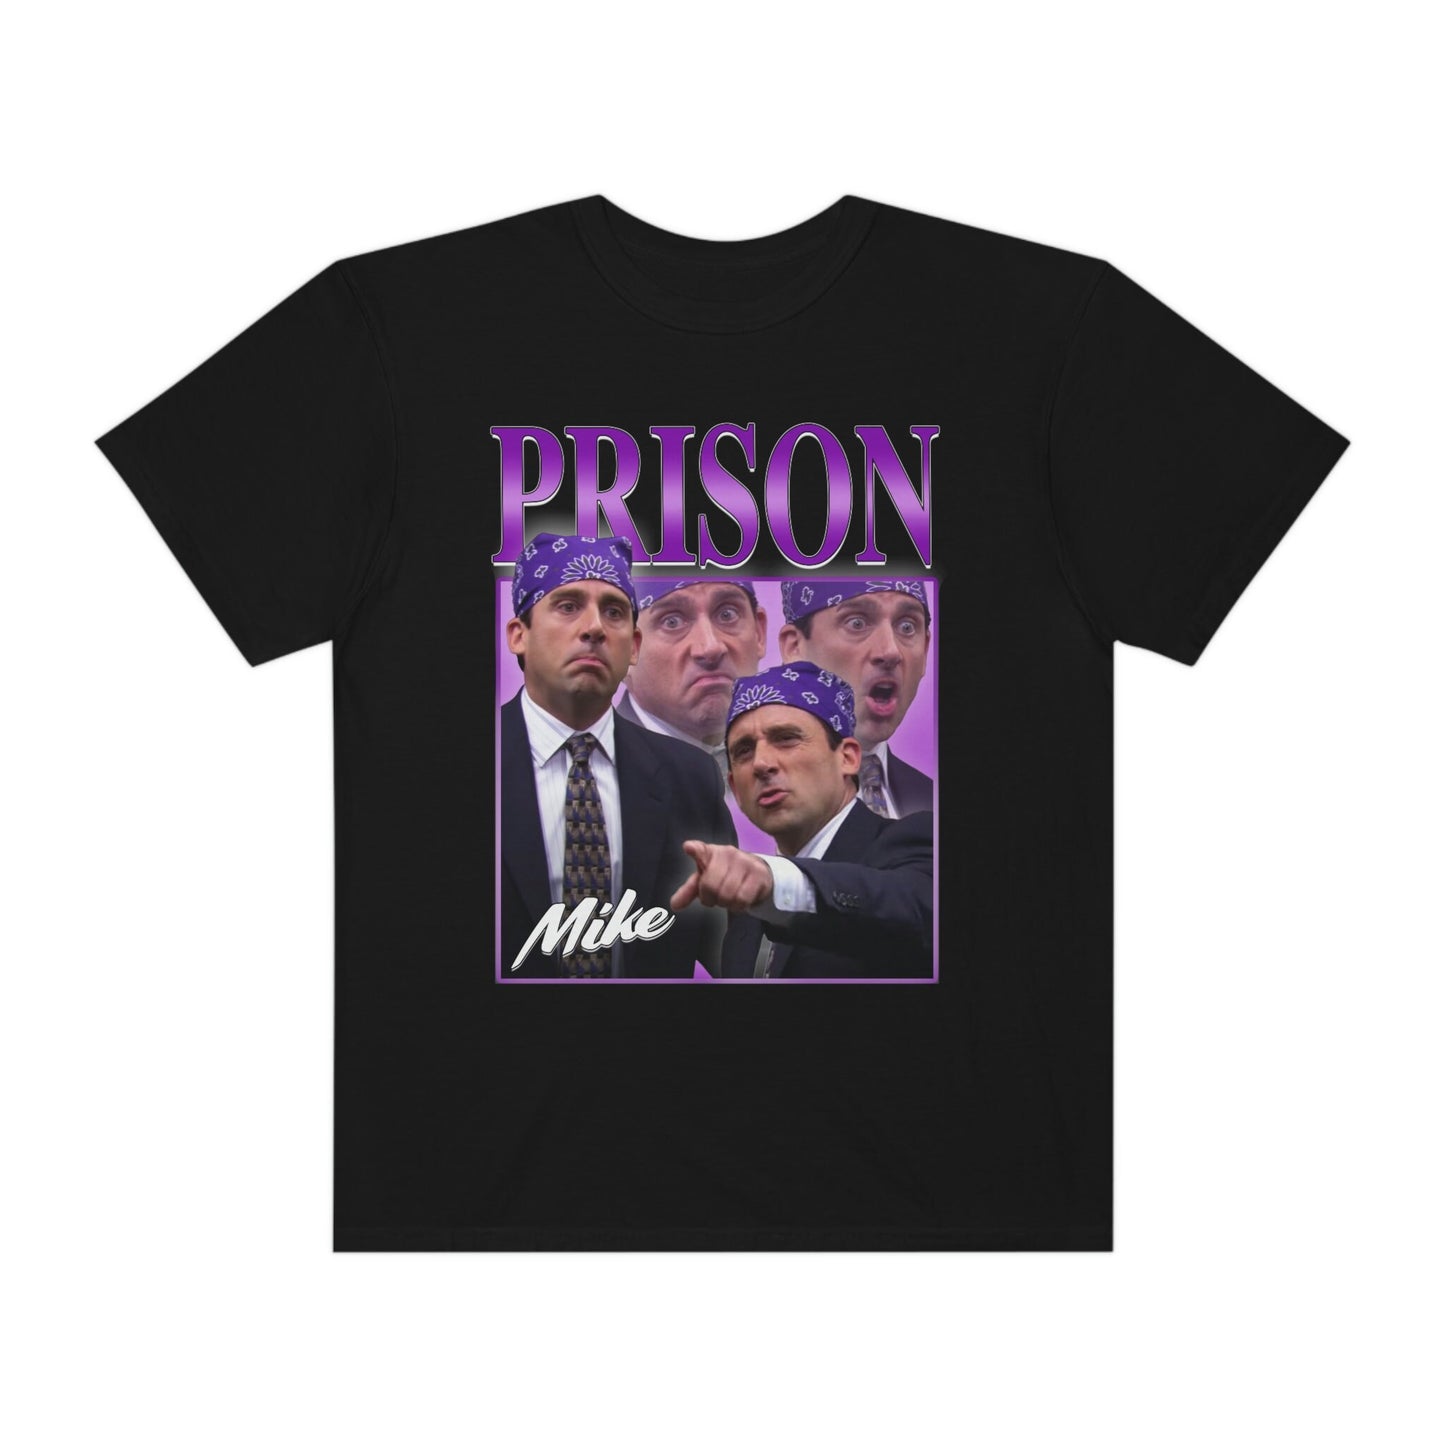 Prison Mike Shirt, Michael Scott Shirt, The Office Fan gift, Michael Scott Shirt, Funny Office Shirt, Dwight shirt, 90s hiphop tee